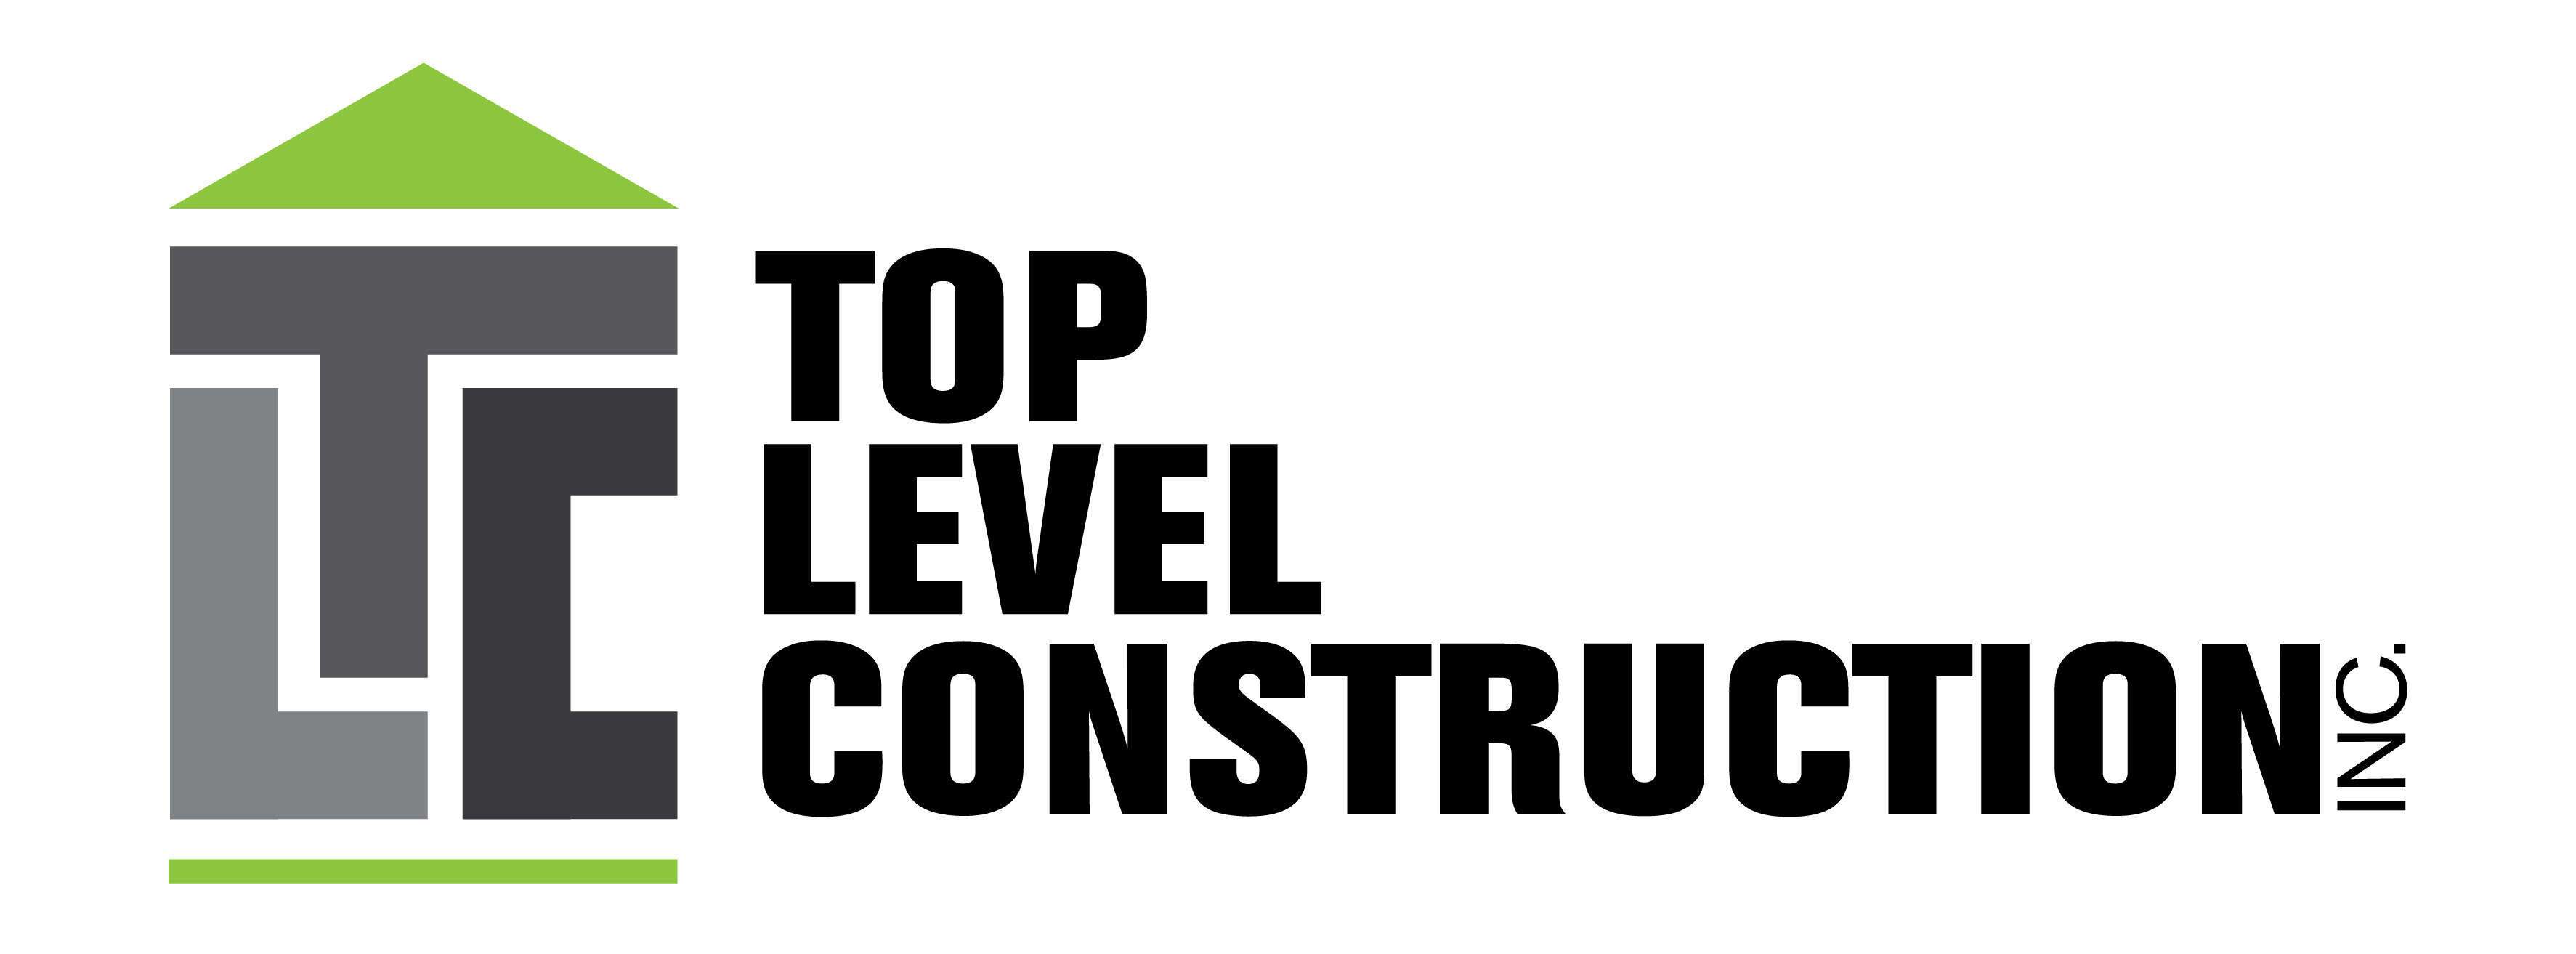 Top Level Construction